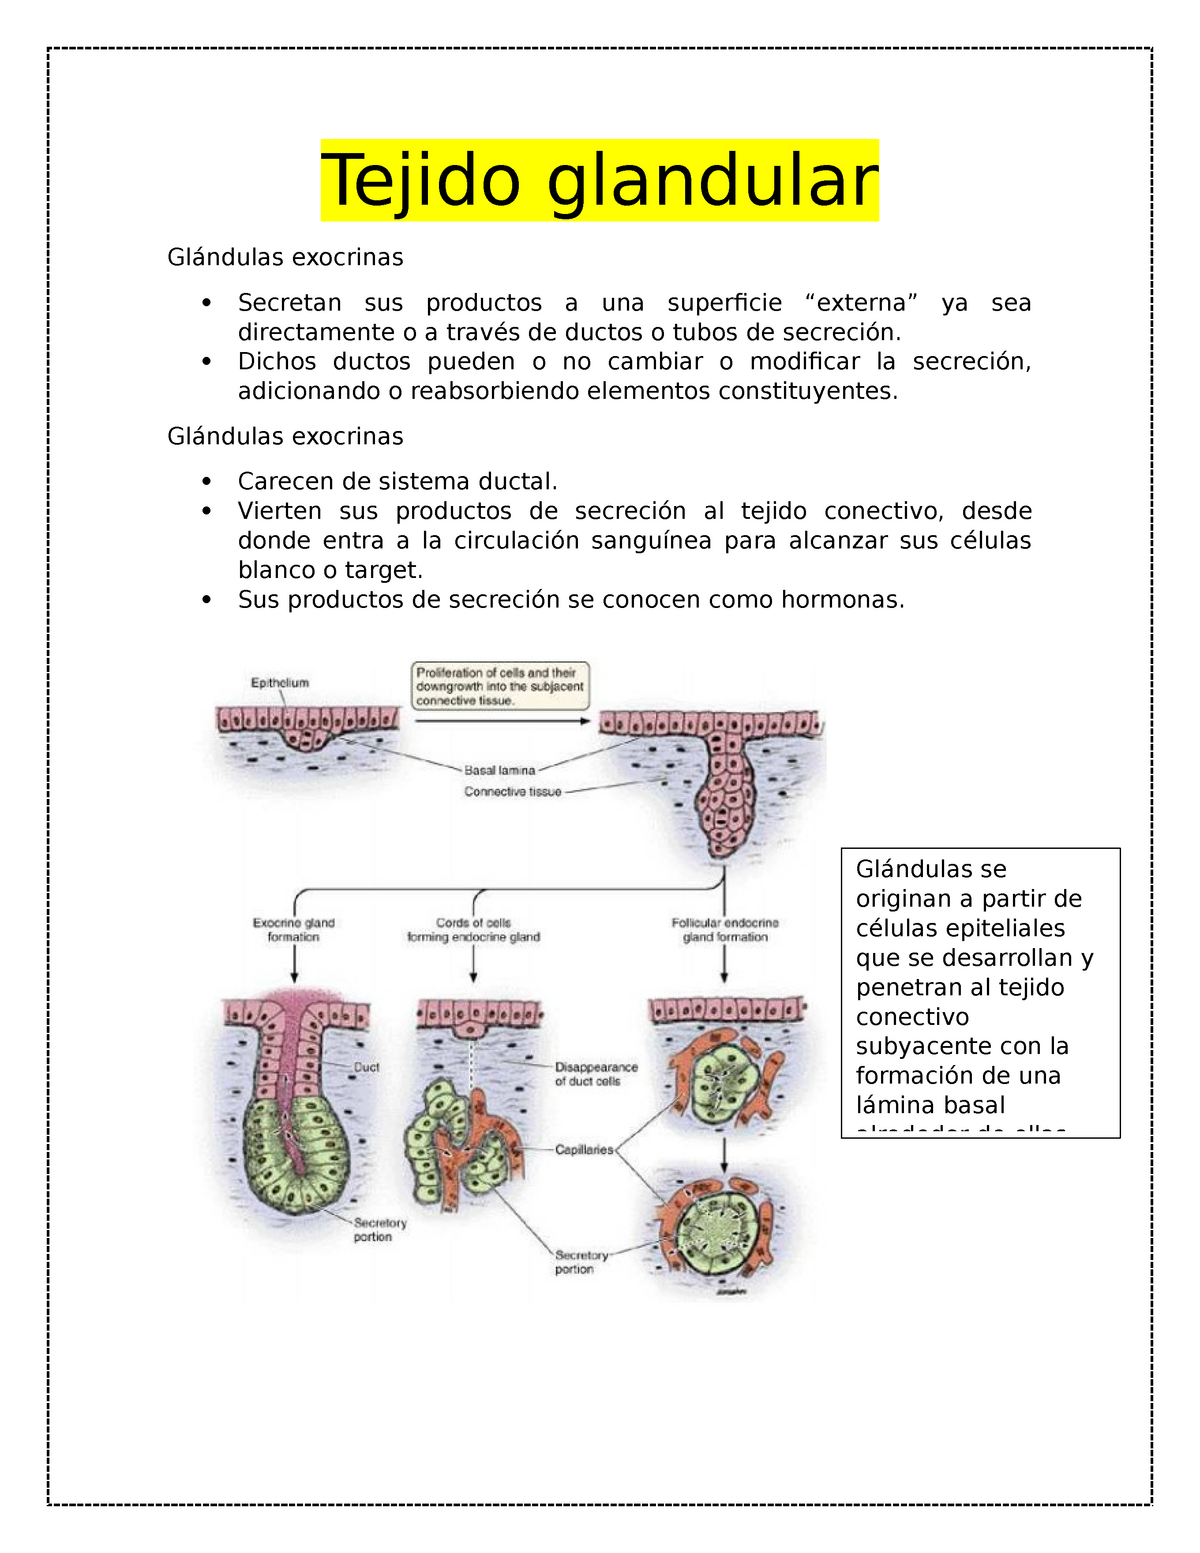 tejido glandular histologia tejido glandular glándulas exocrinas